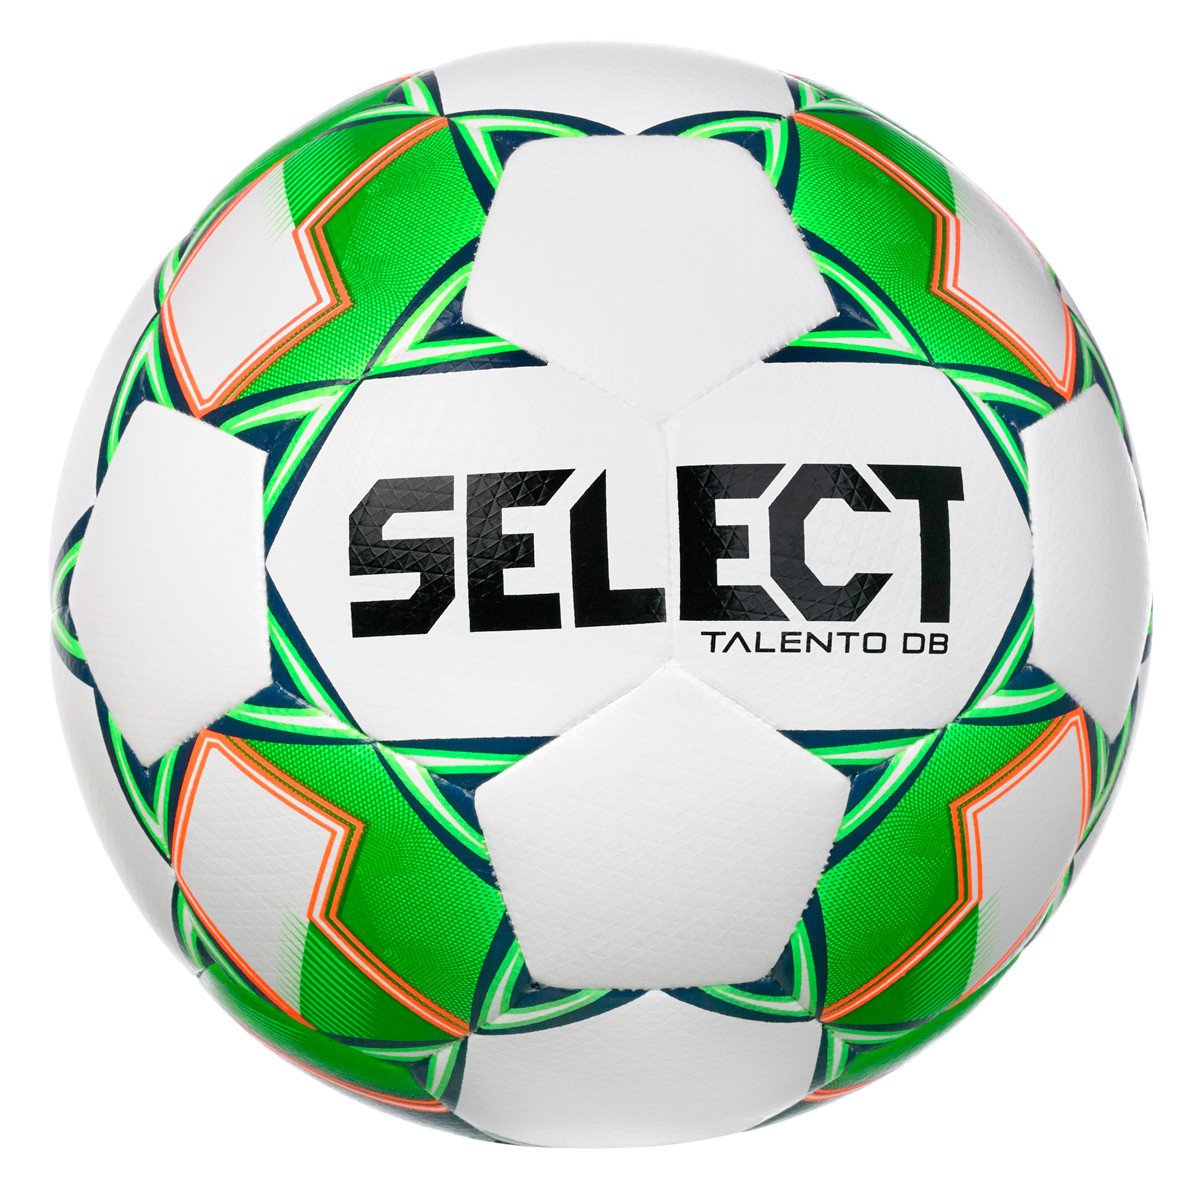 Select Talento DB v22 Fodbold